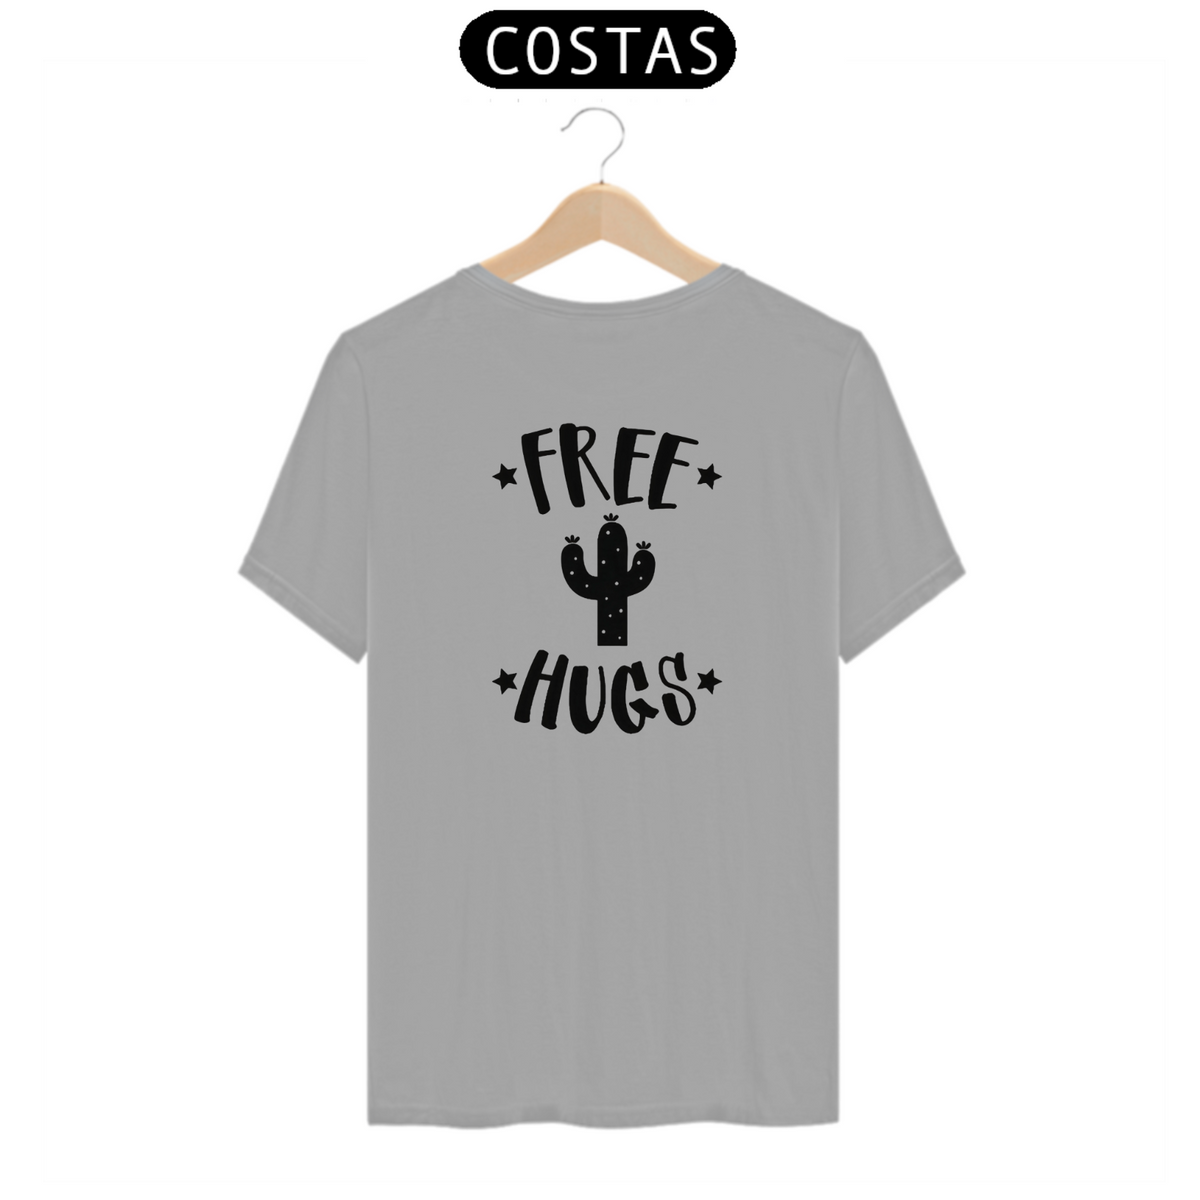 Nome do produto: Camiseta Free Hugs - Costas